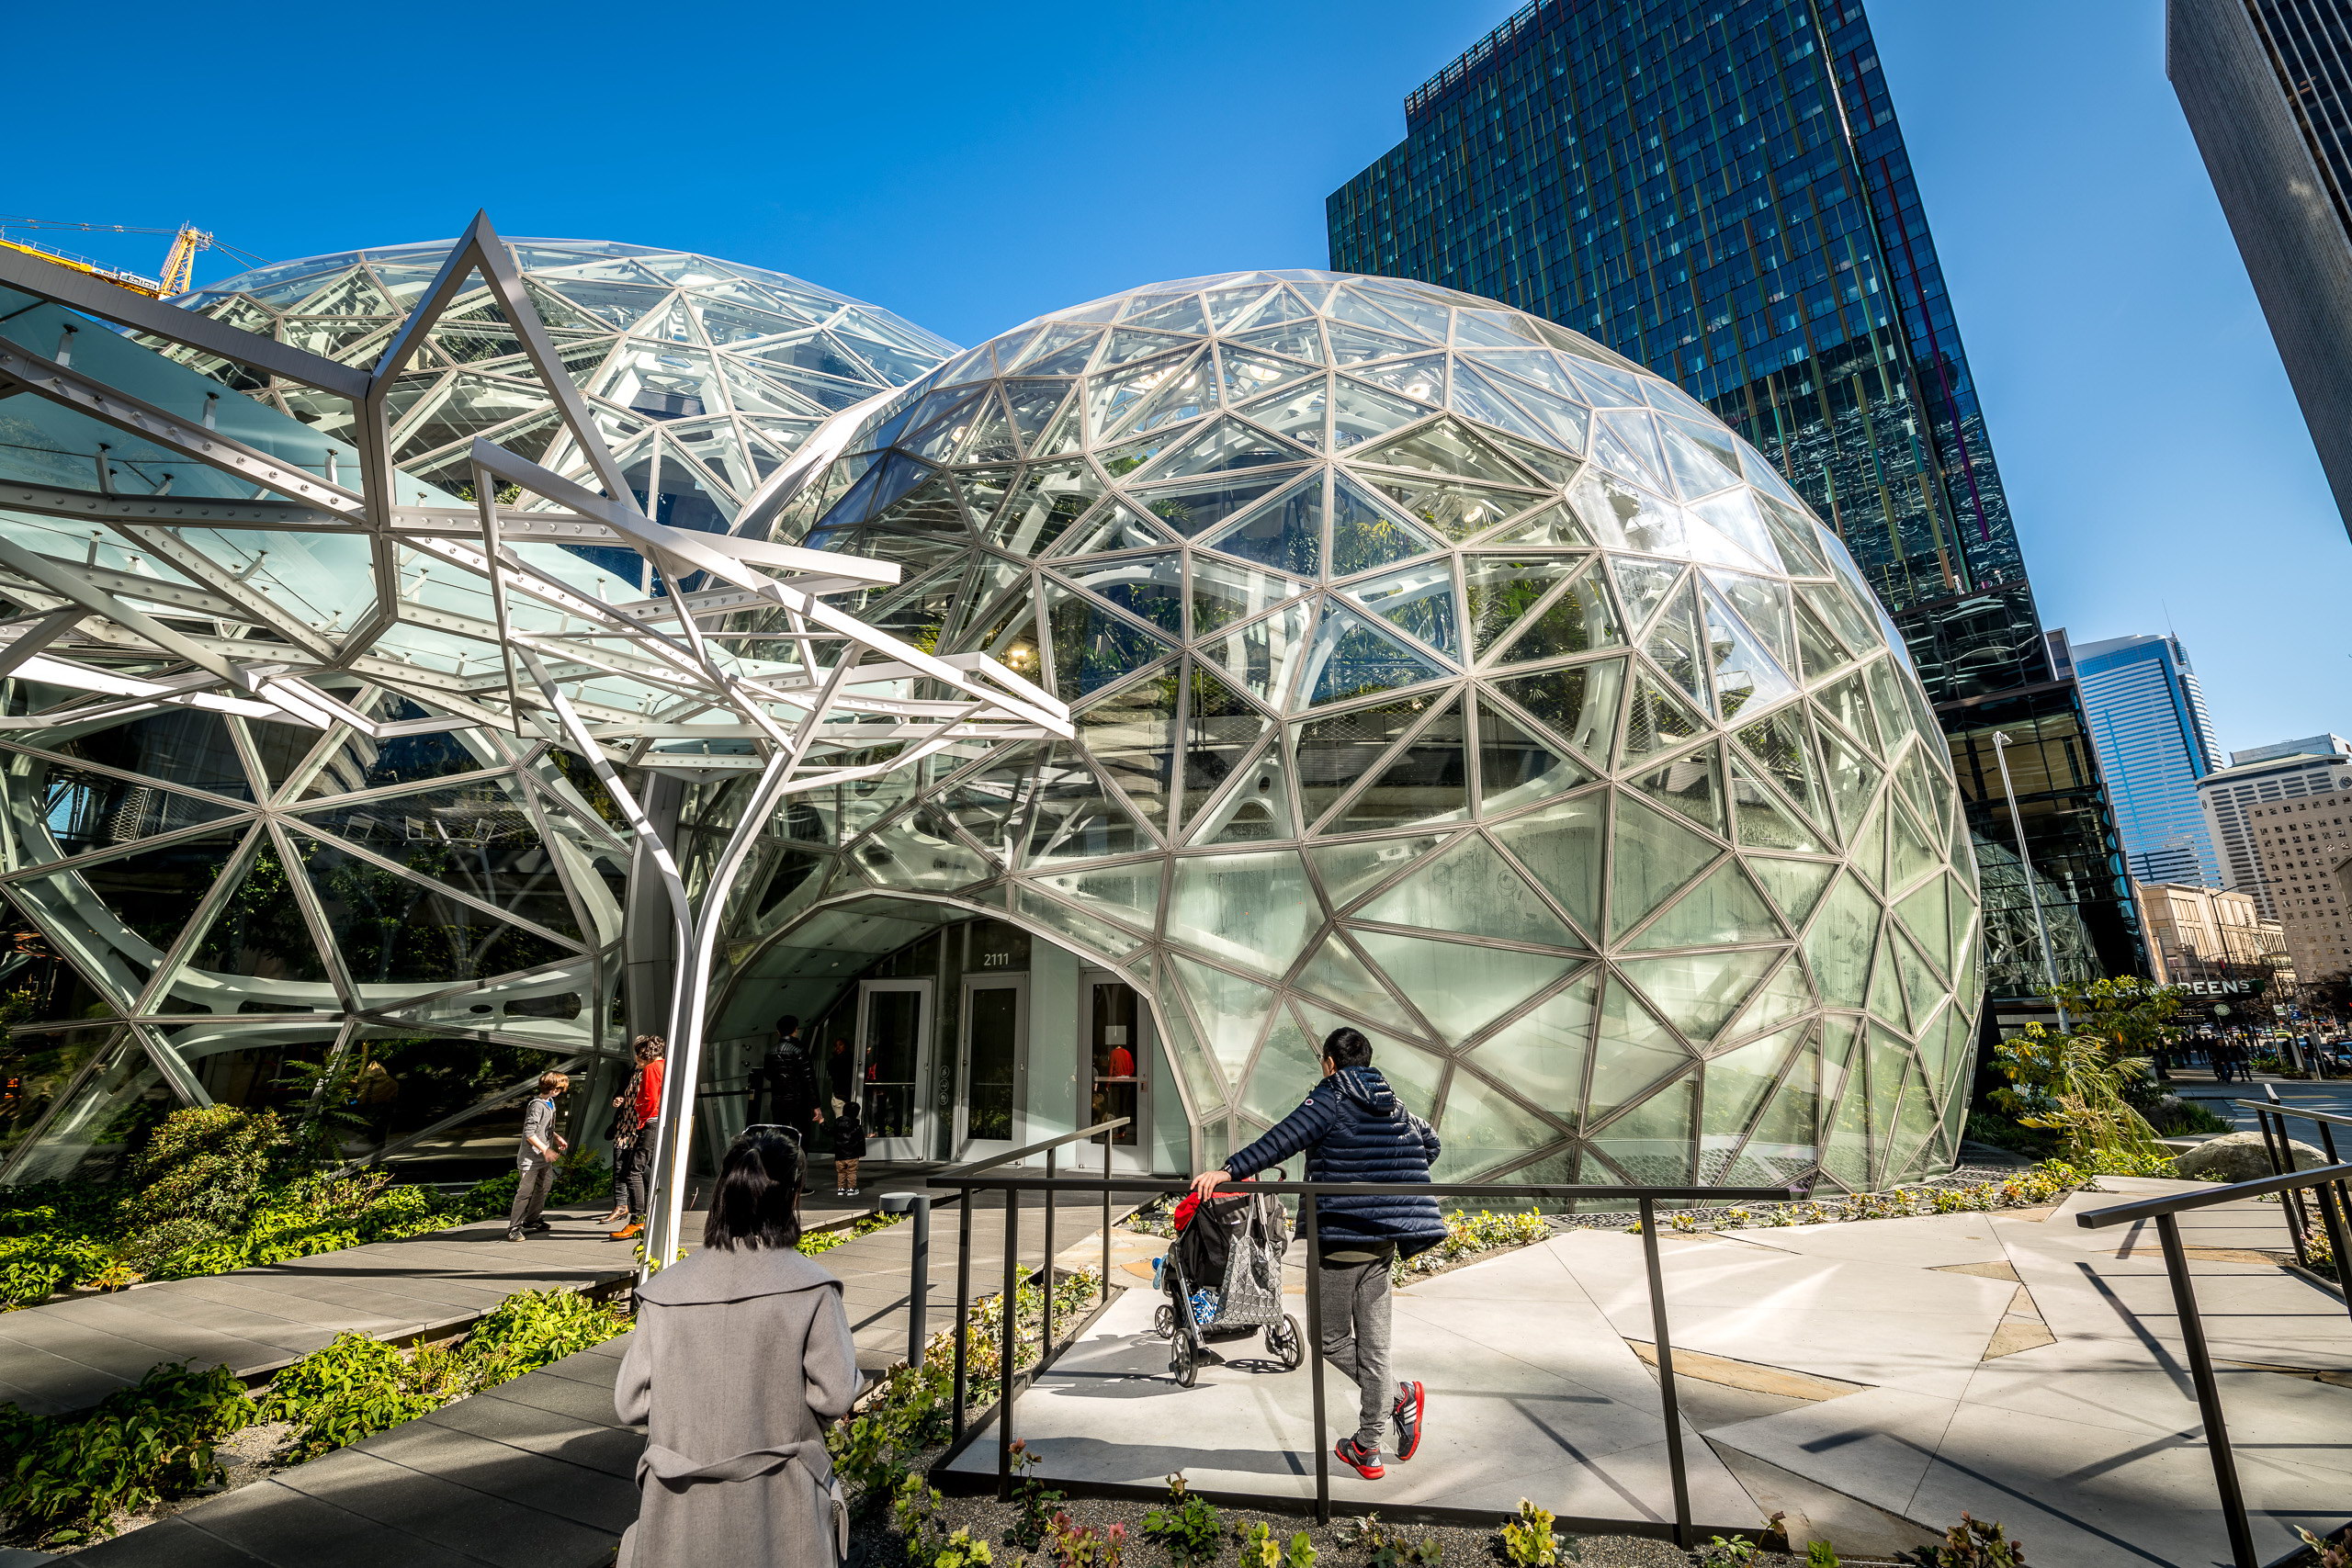 The Spheres in the New Amazon Headquarters